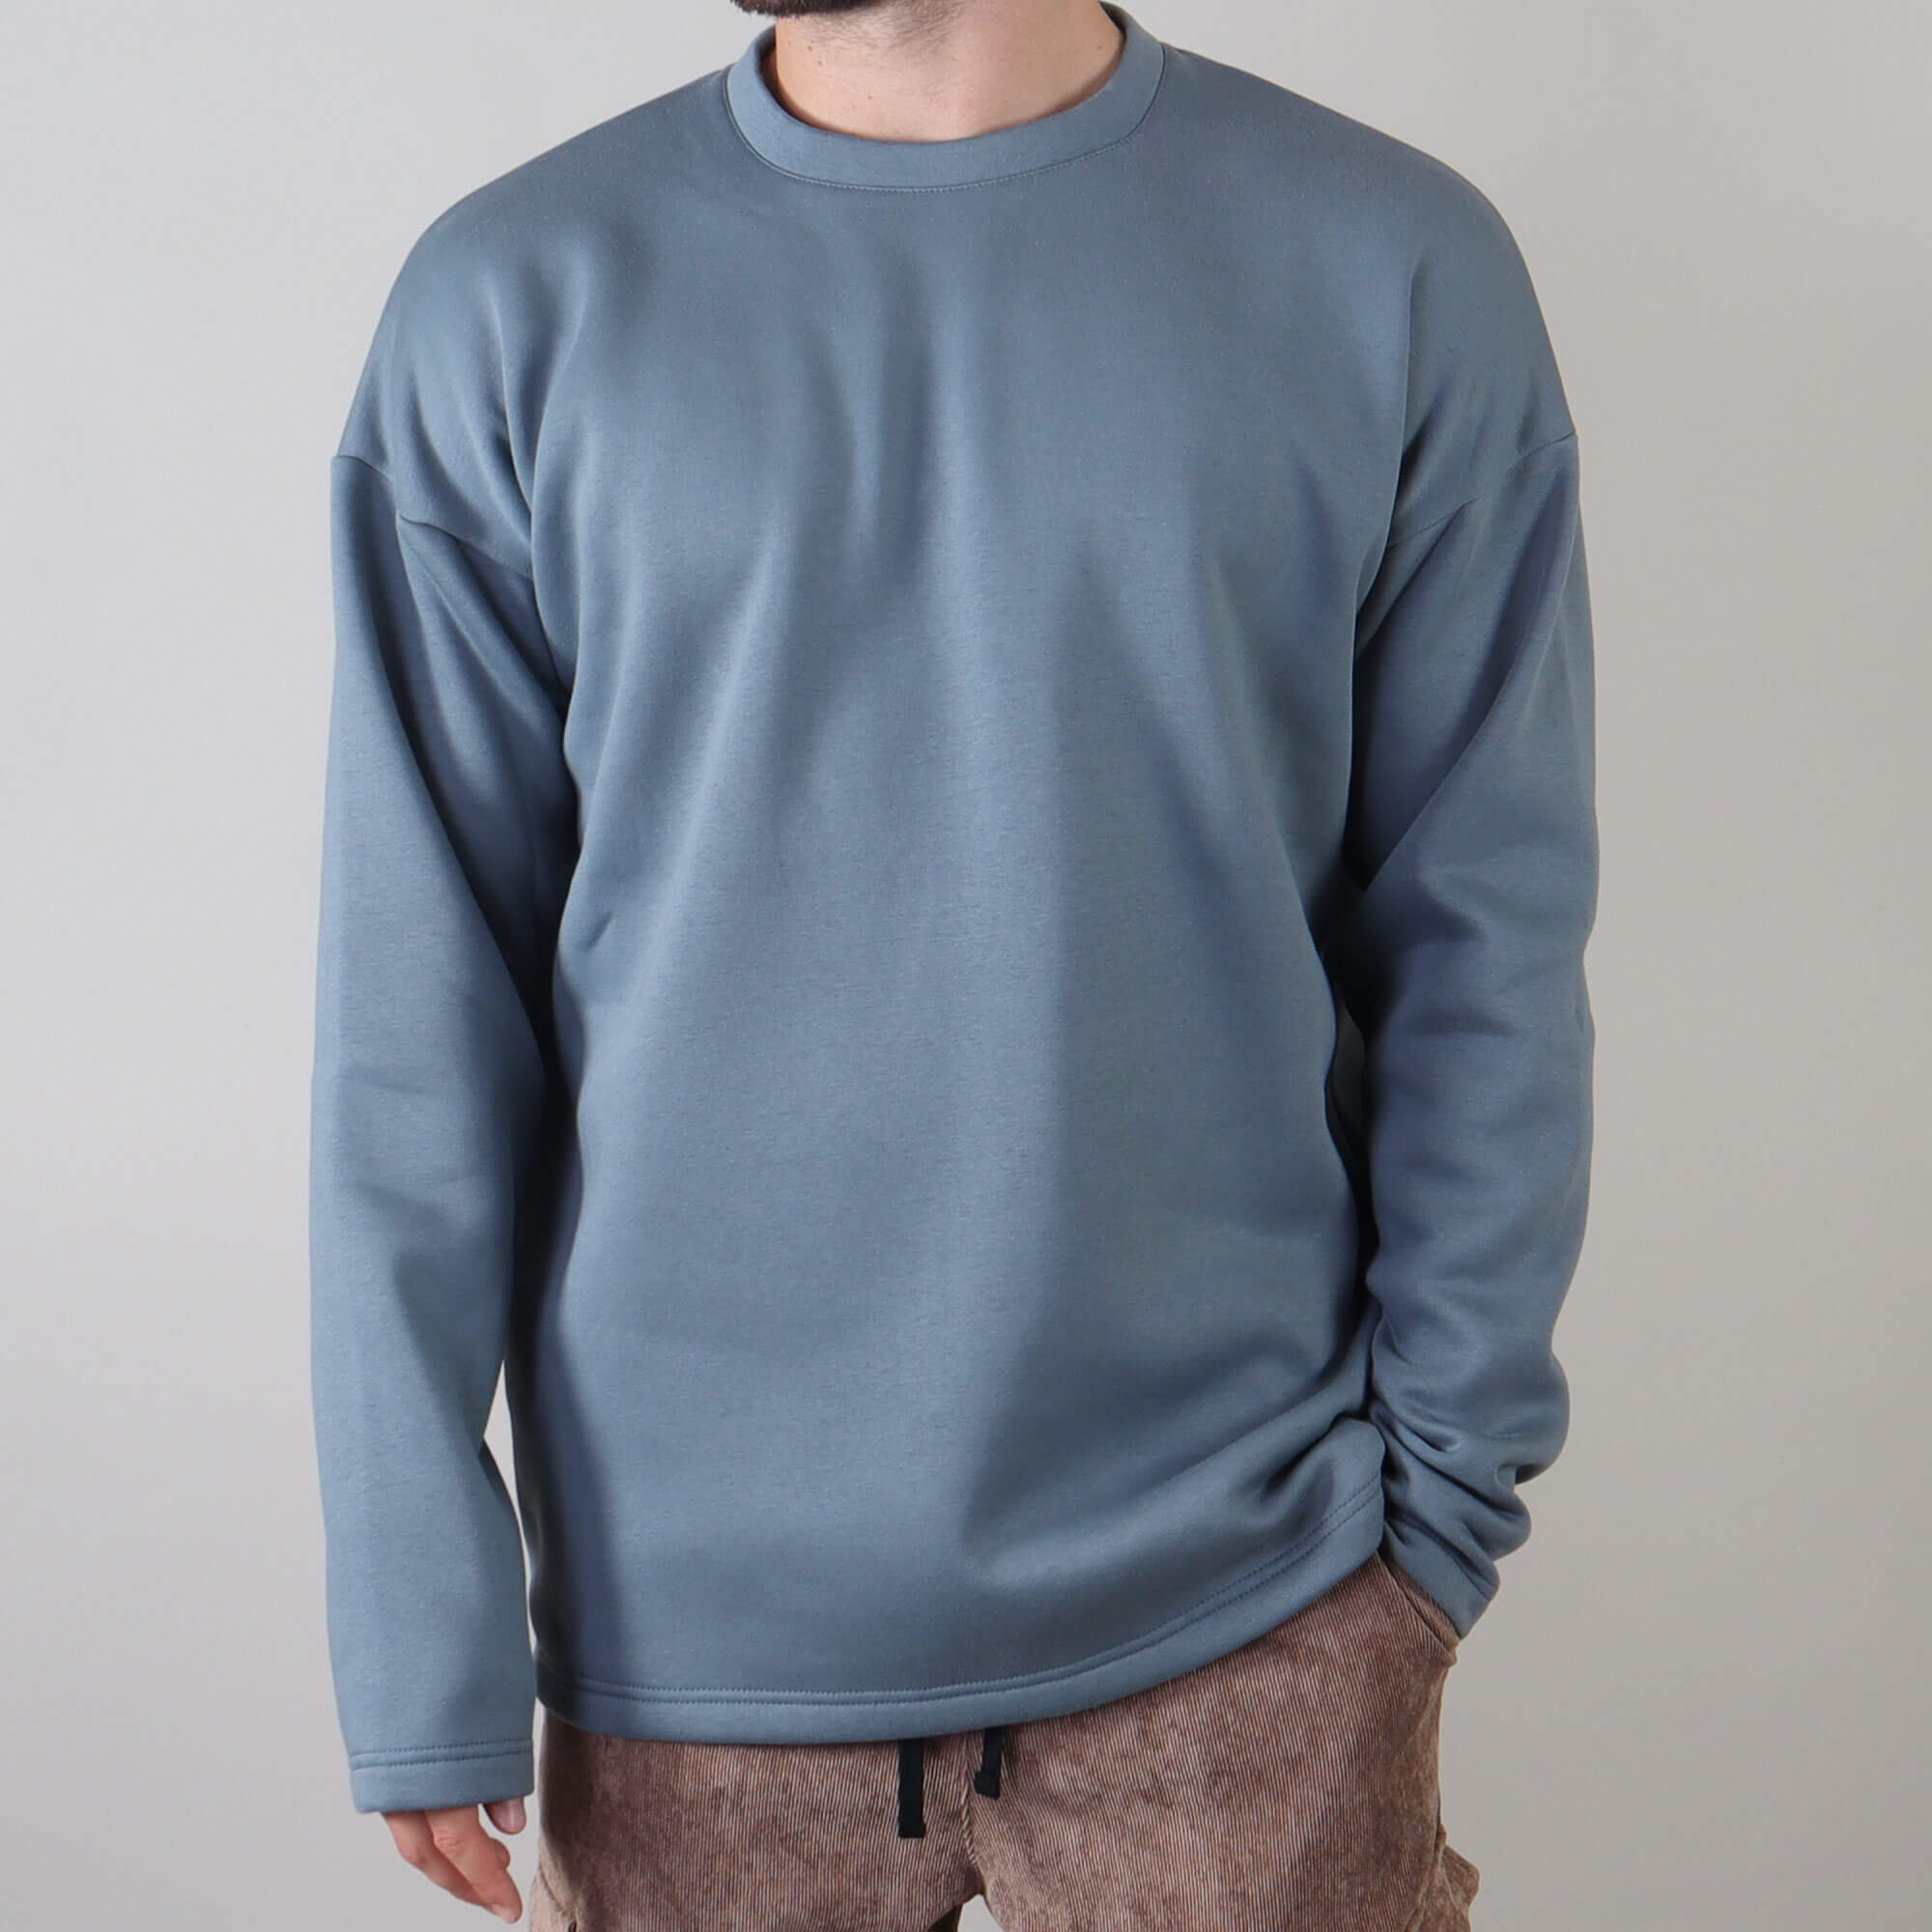 PRJCT sweater light blue